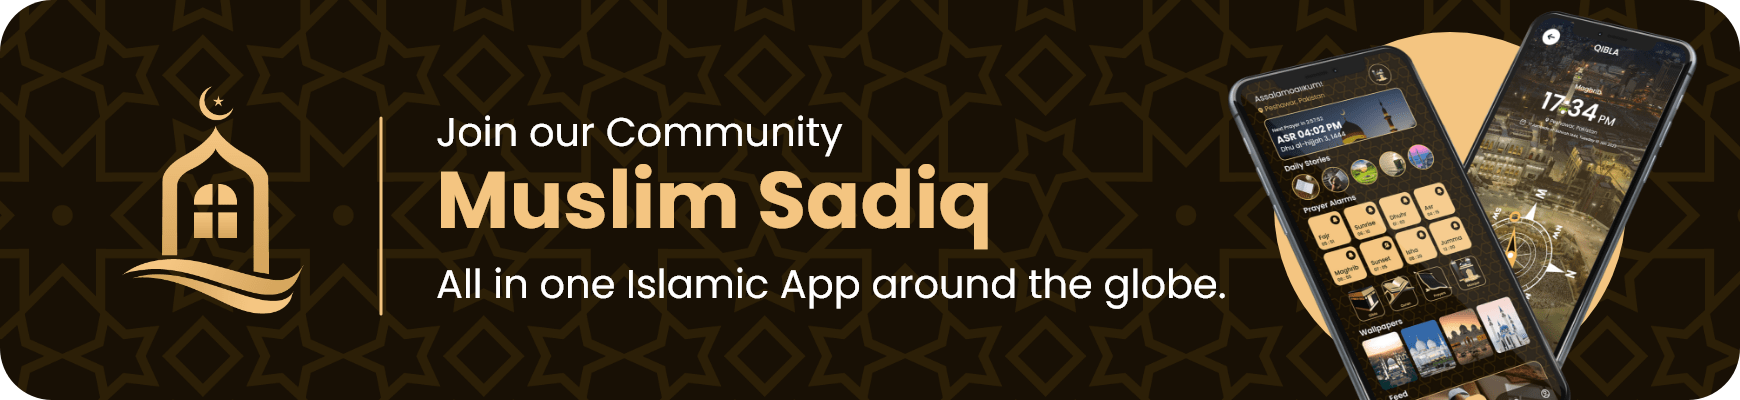 Muslim_Sadiq_App_Ad_Banner